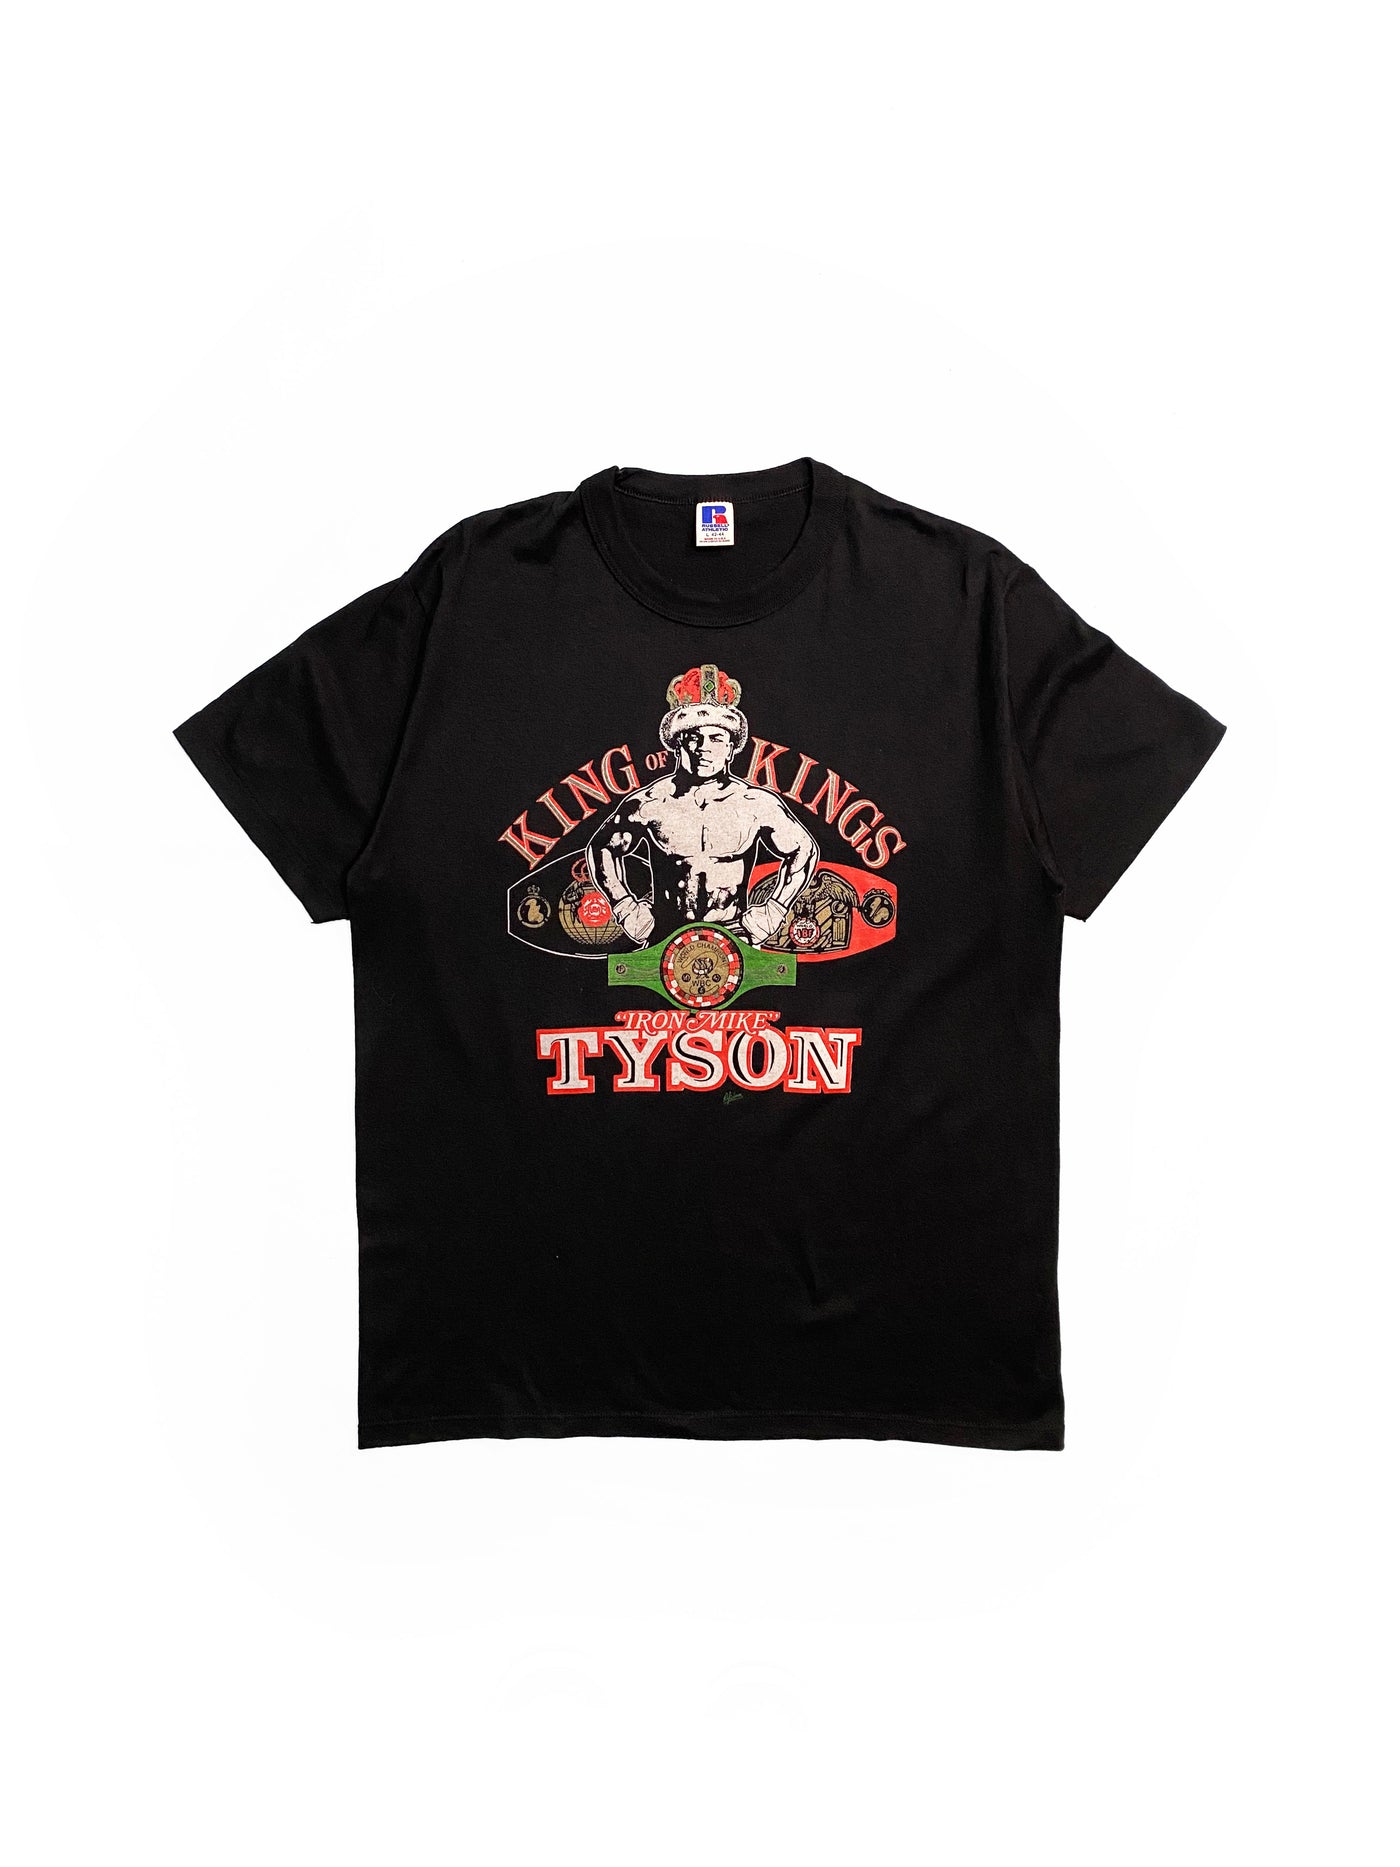 Vintage 90s Iron Mike Tyson T-Shirt